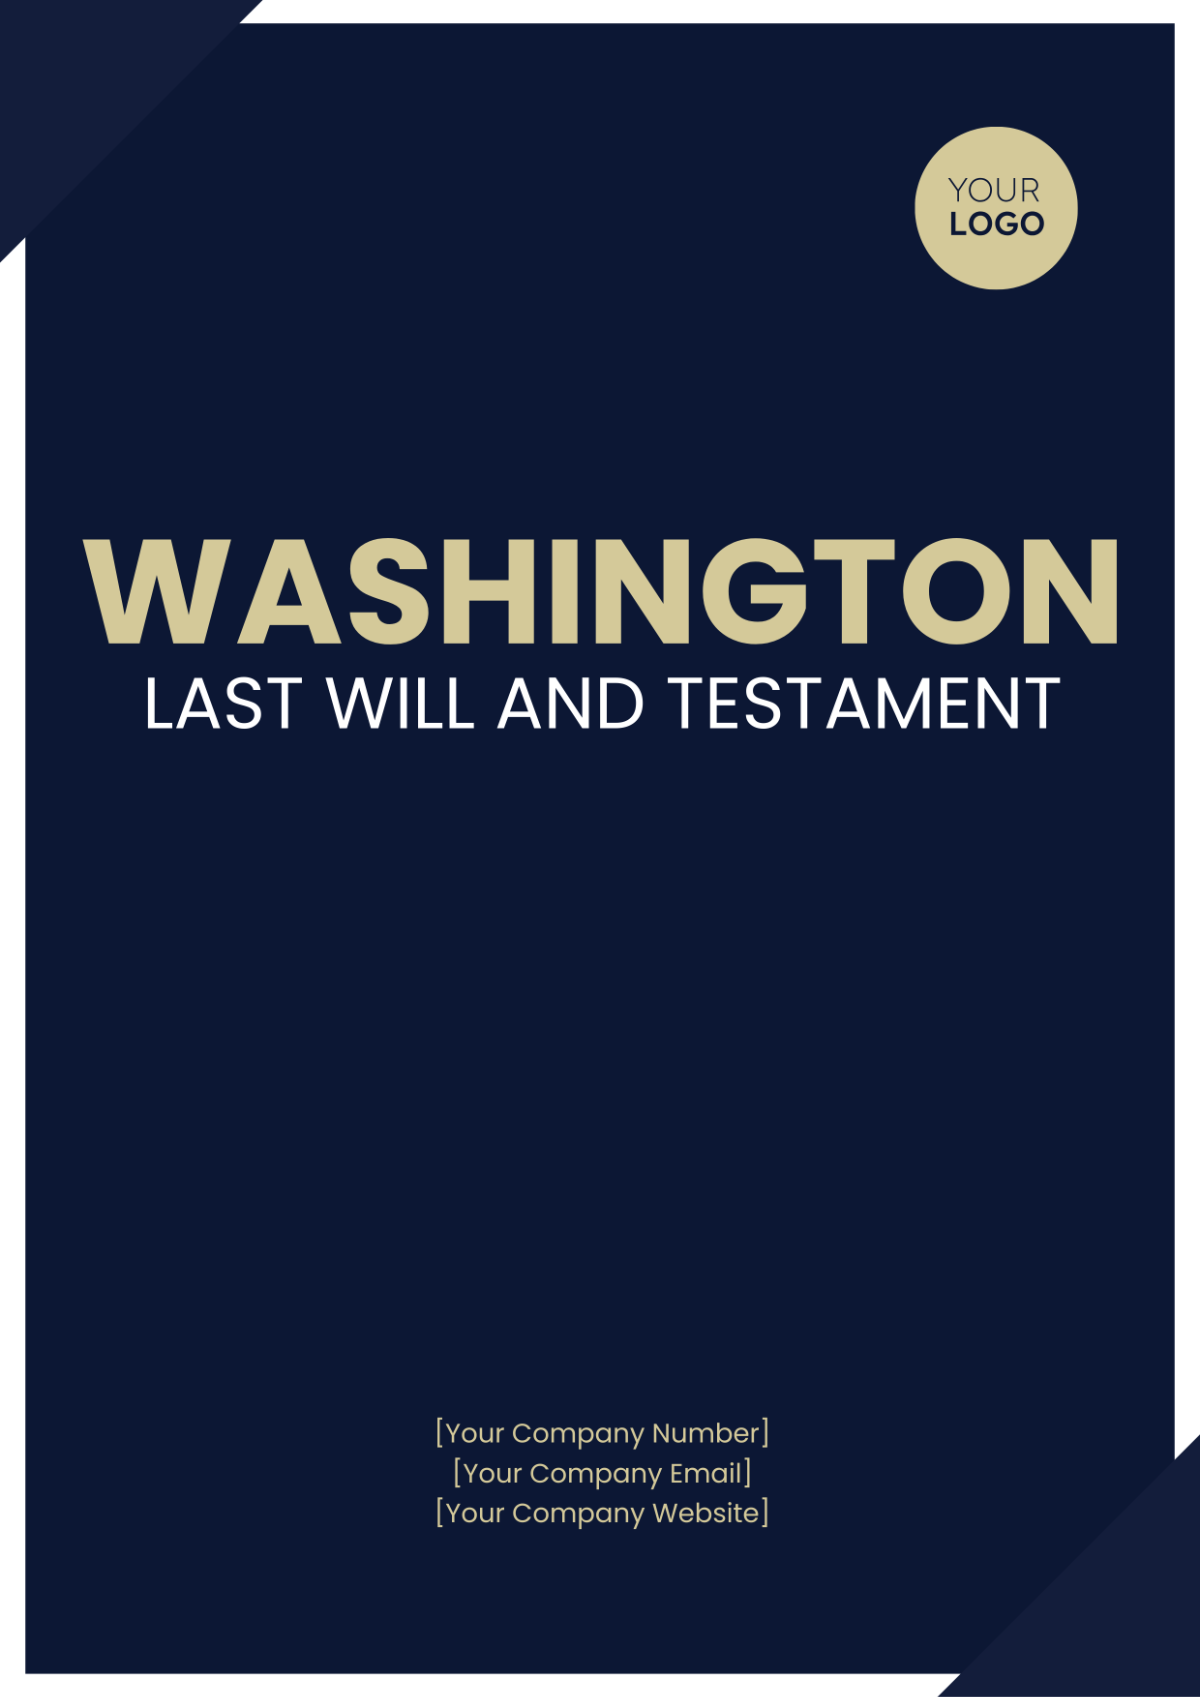 Free Washington Last Will and Testament Template